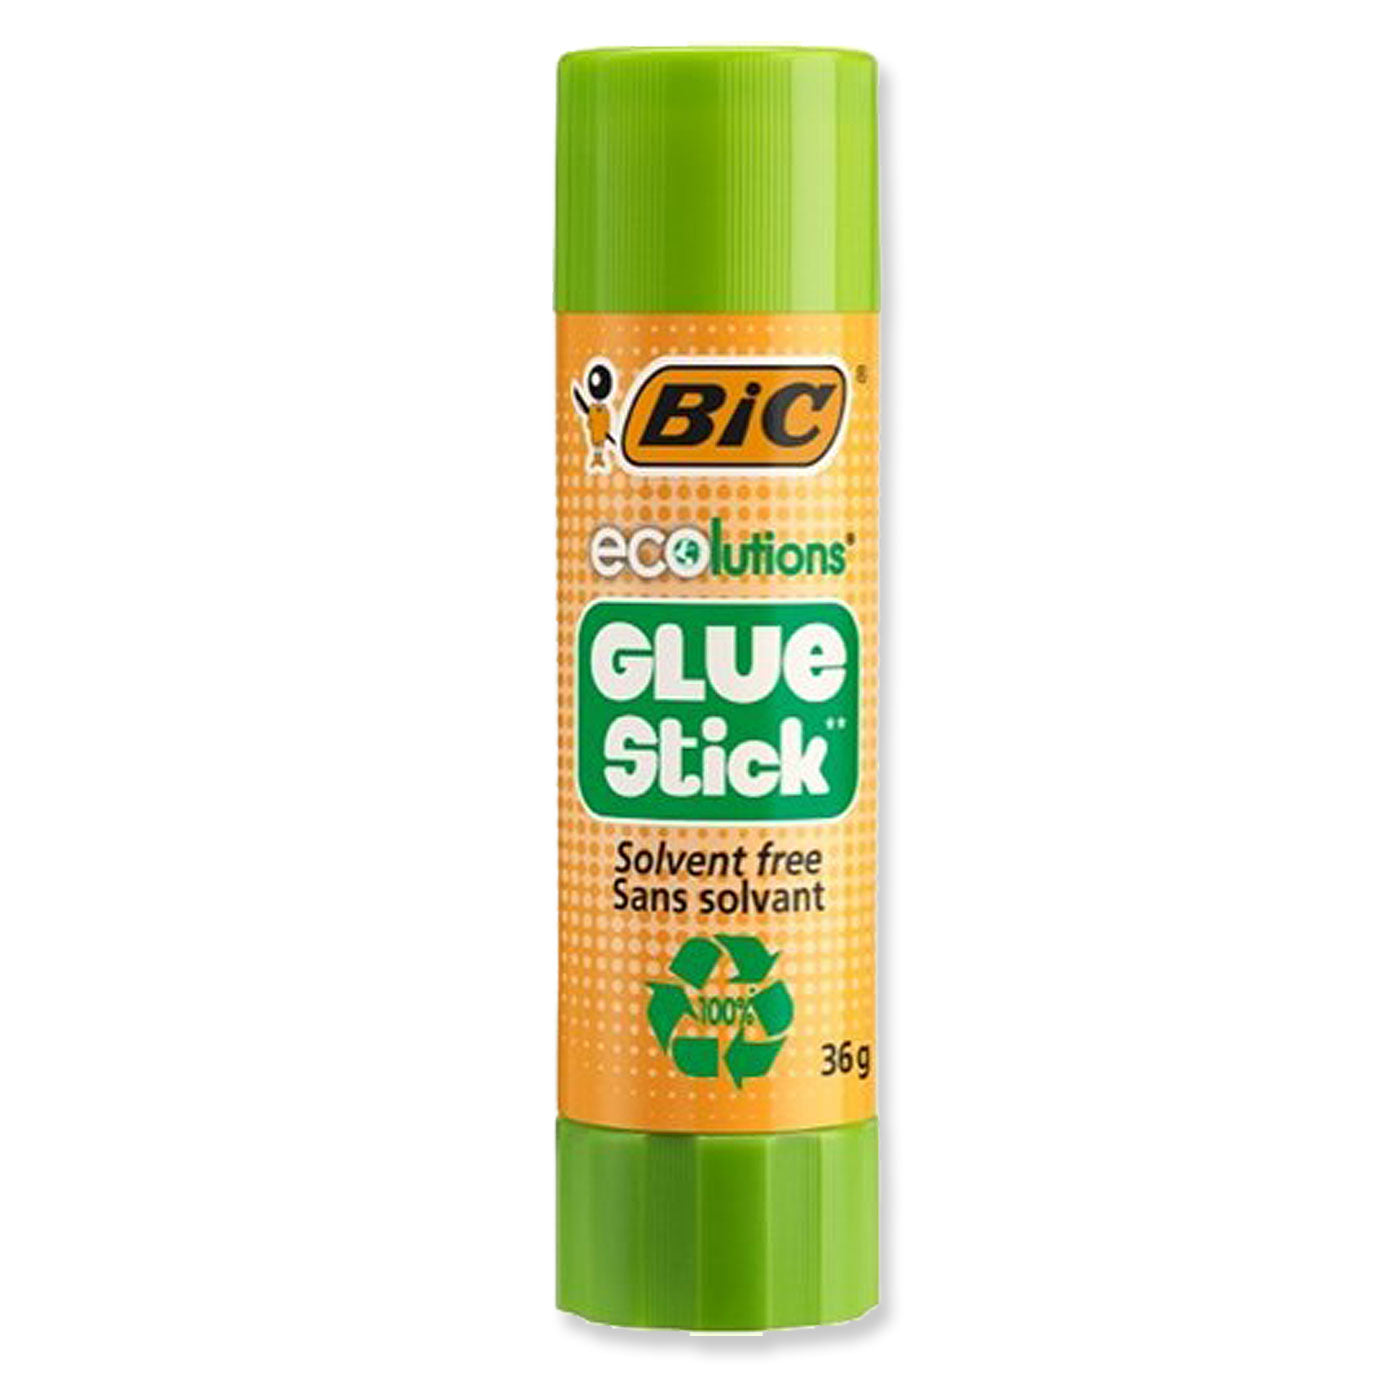 BIC Ecolutions Glue Stick 36g